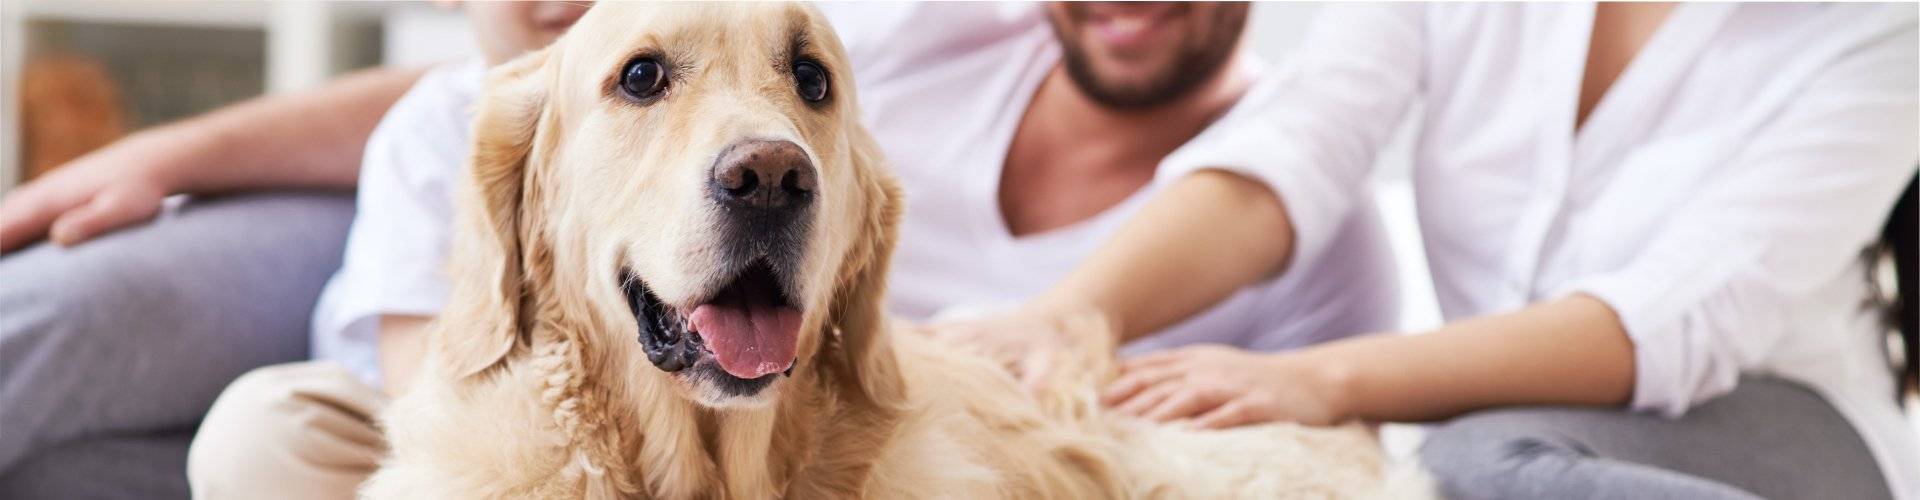 Dog Insurance Advice | Pet Talk | Pets at Home